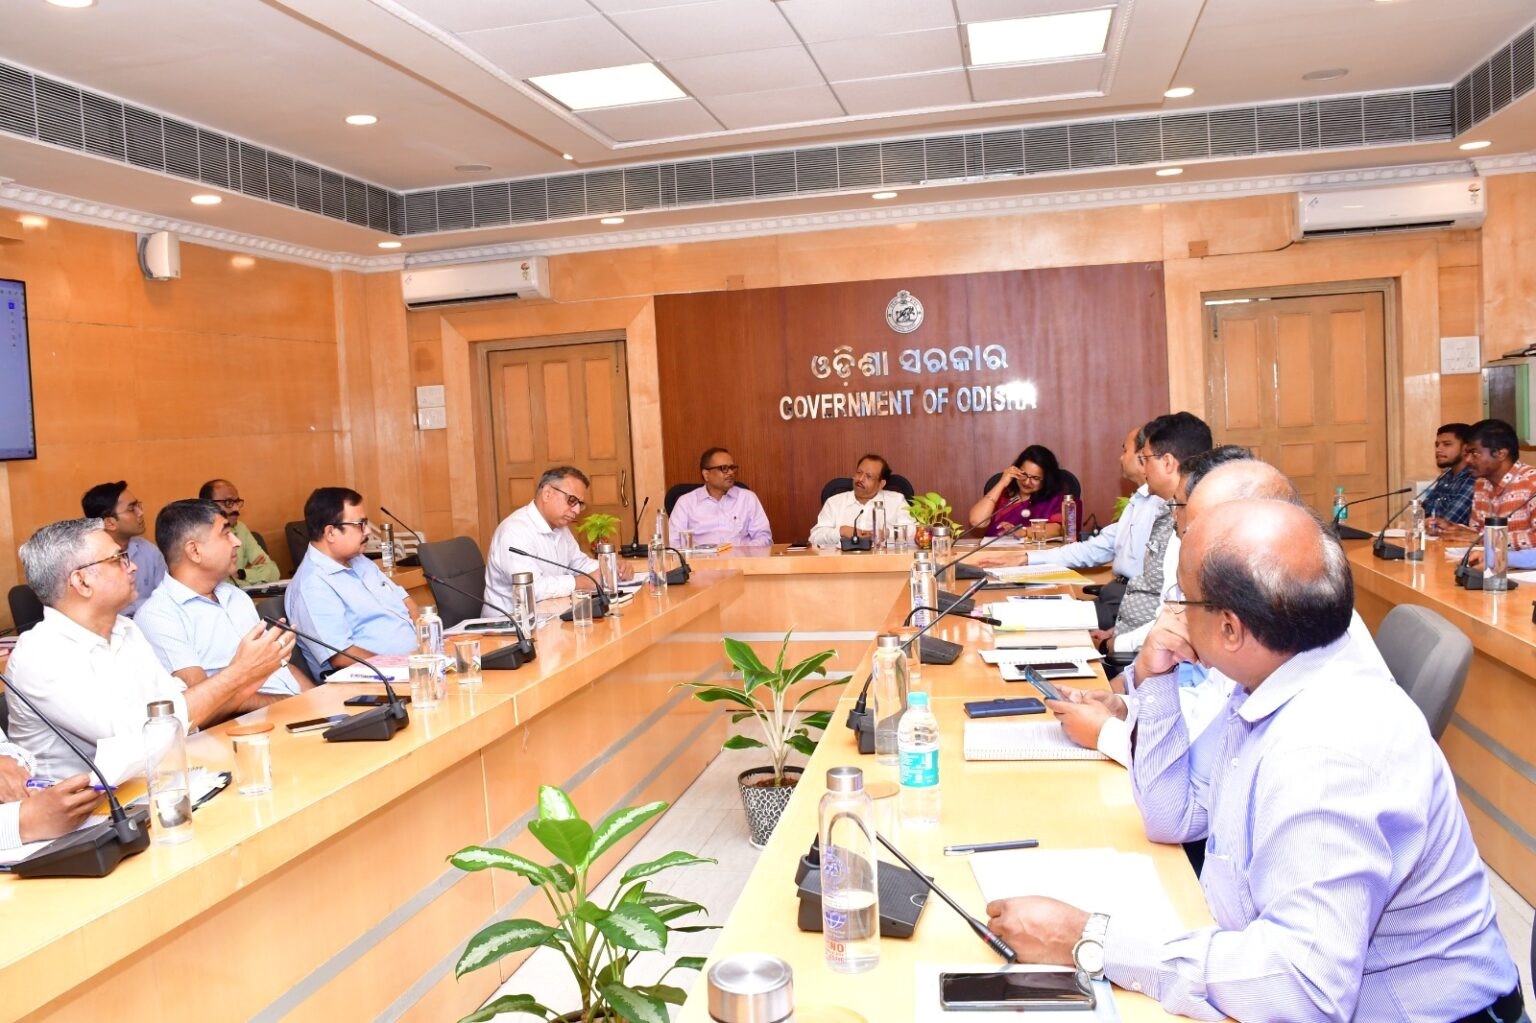 Hindalco’s upcoming INR 241.05 Crores alumina project to help bolster Odisha’s economy